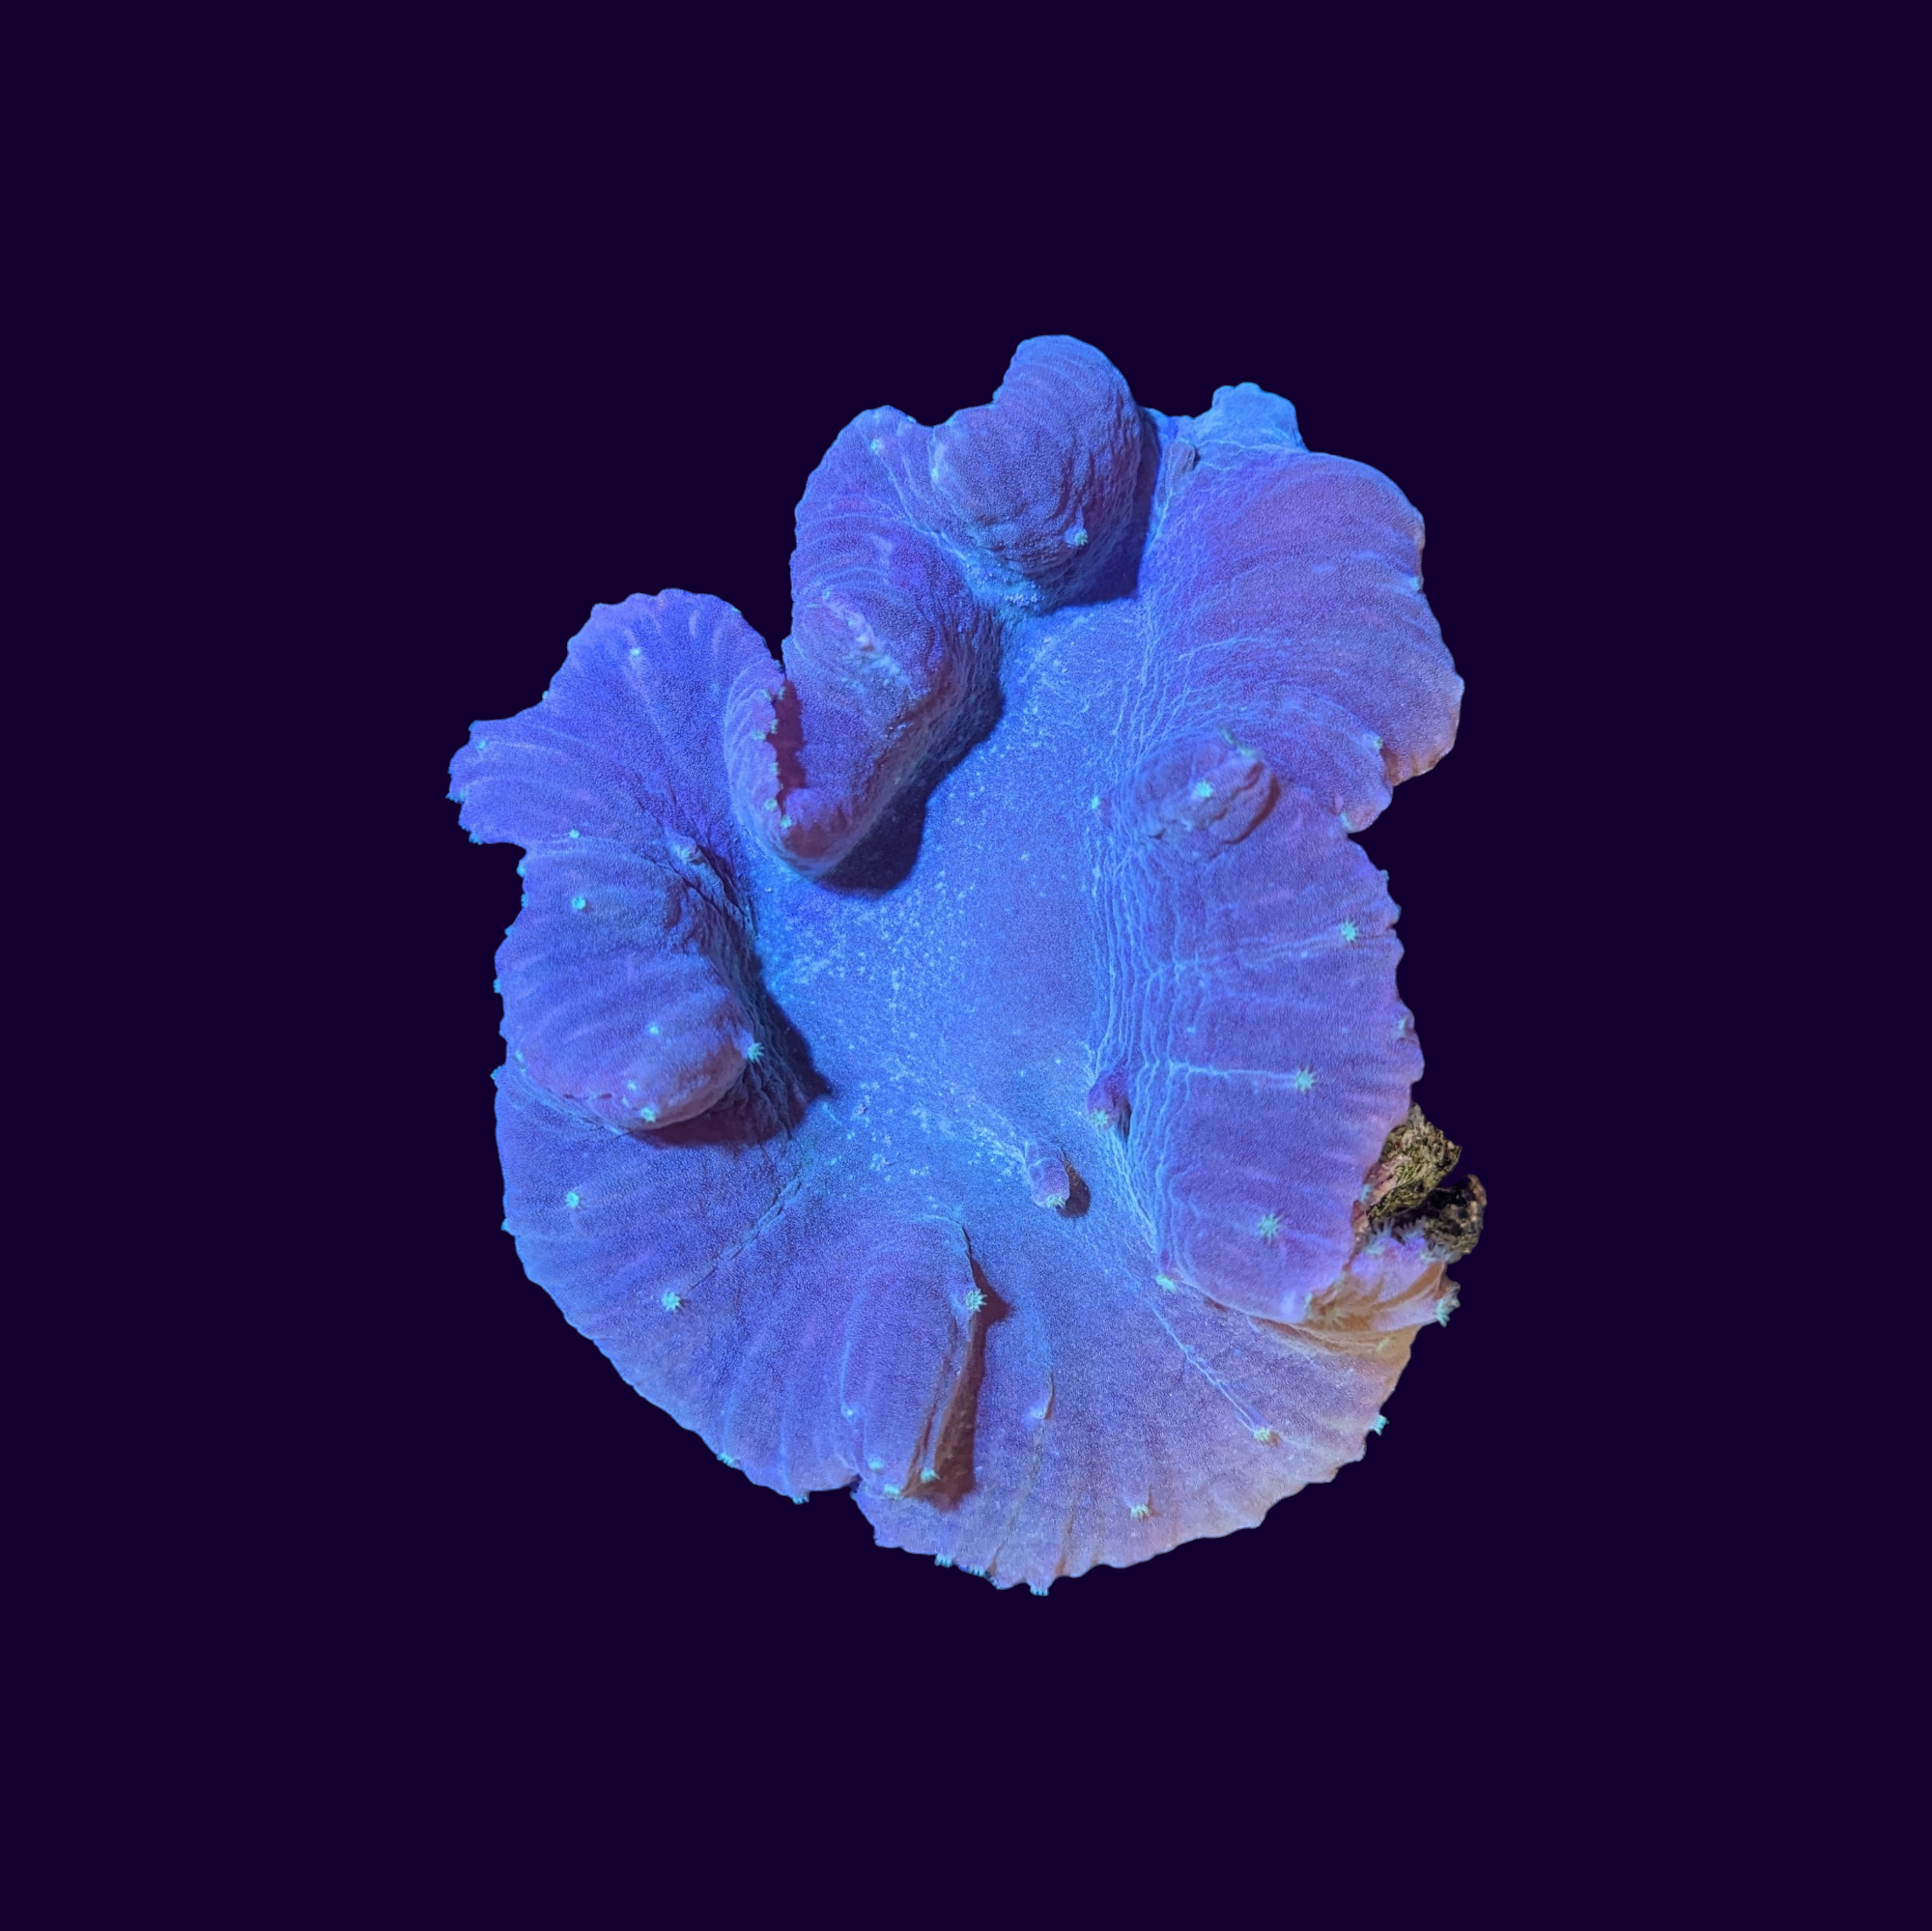 Sinularia Dura Cabbage Leather Coral